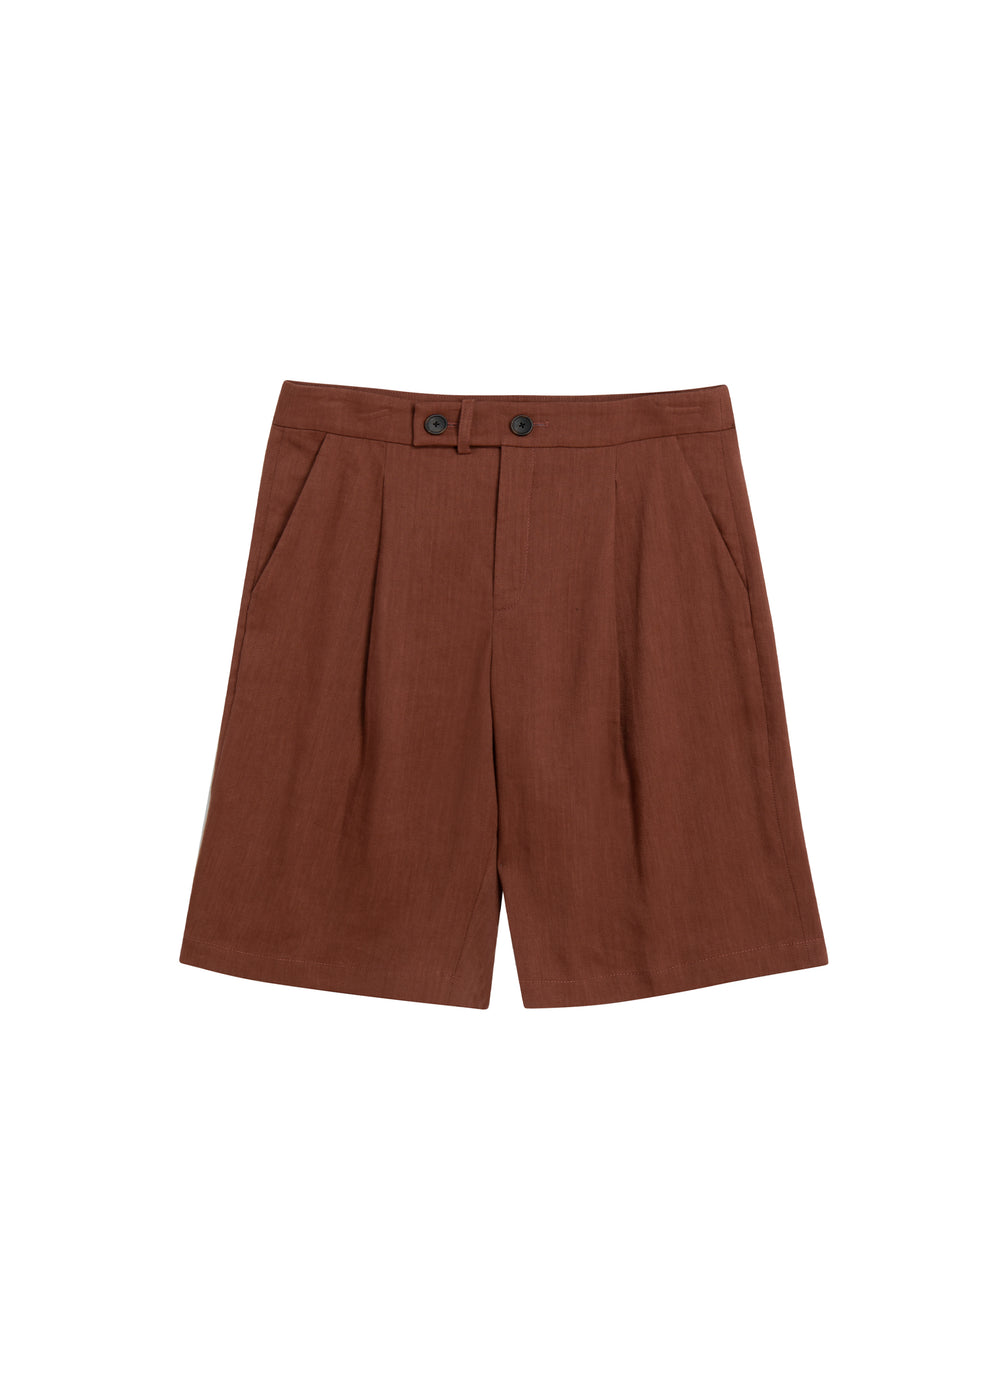 flatlay of brown shorts